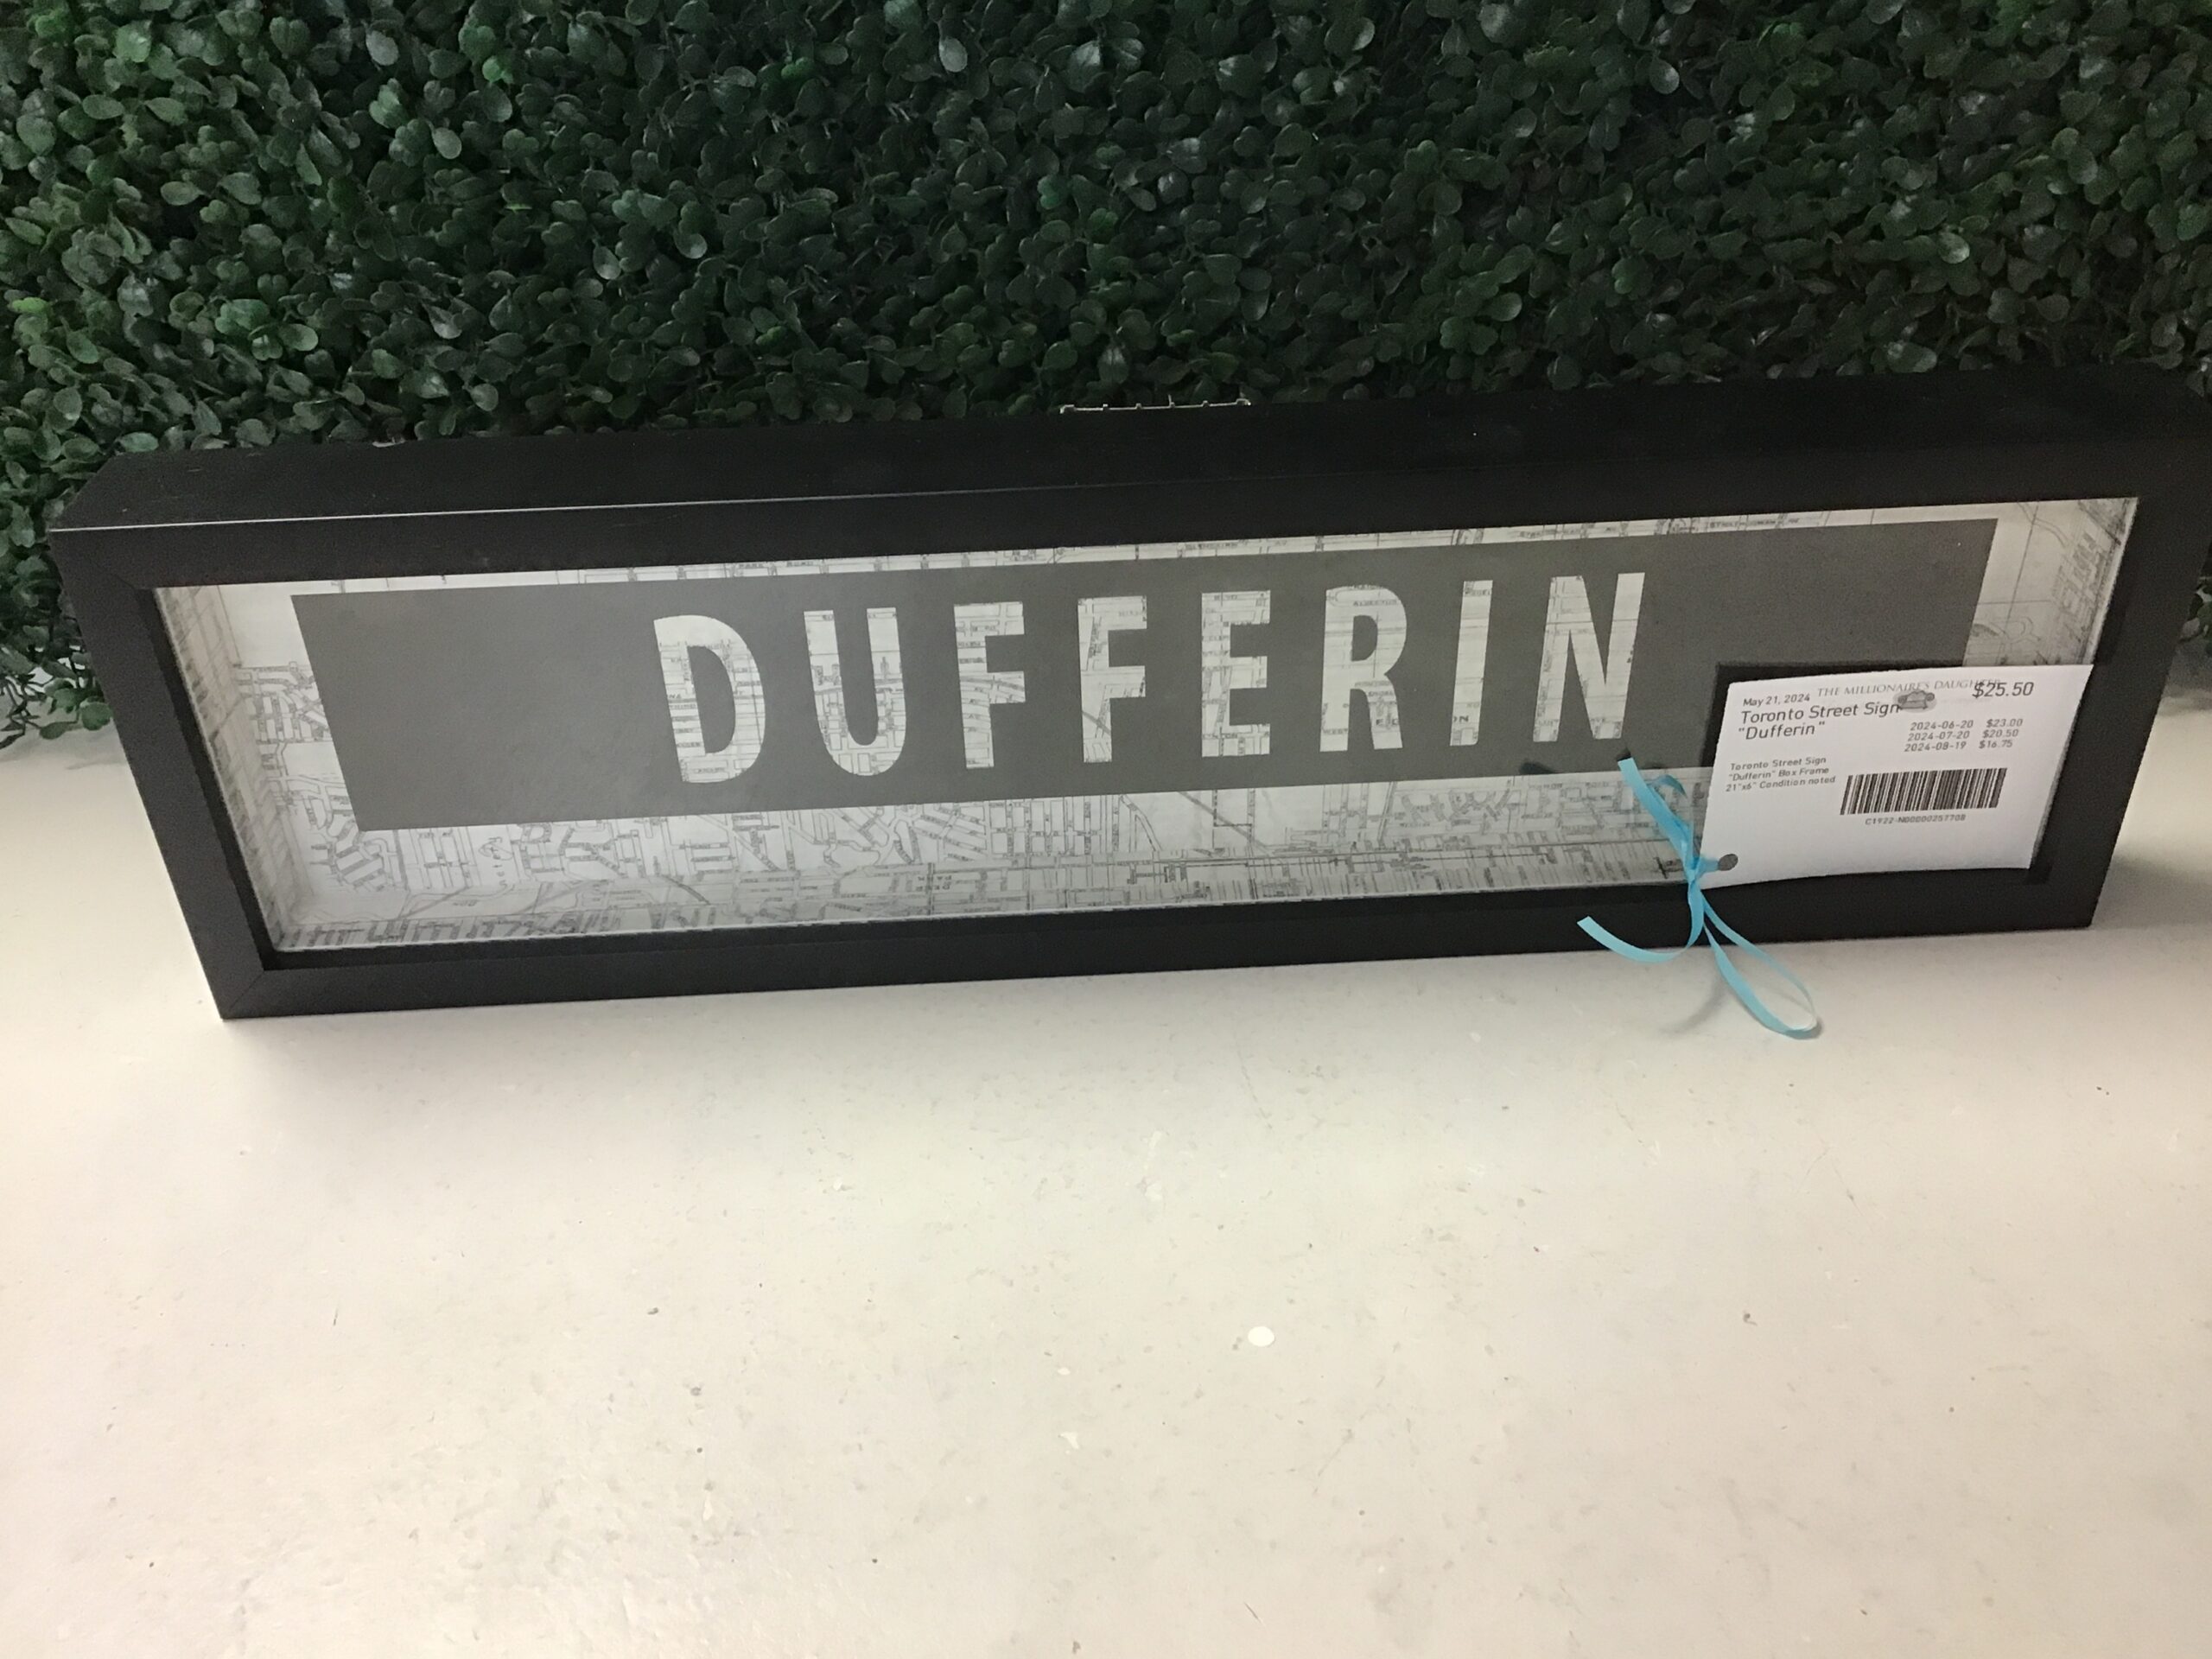 Toronto Street Sign “Dufferin”